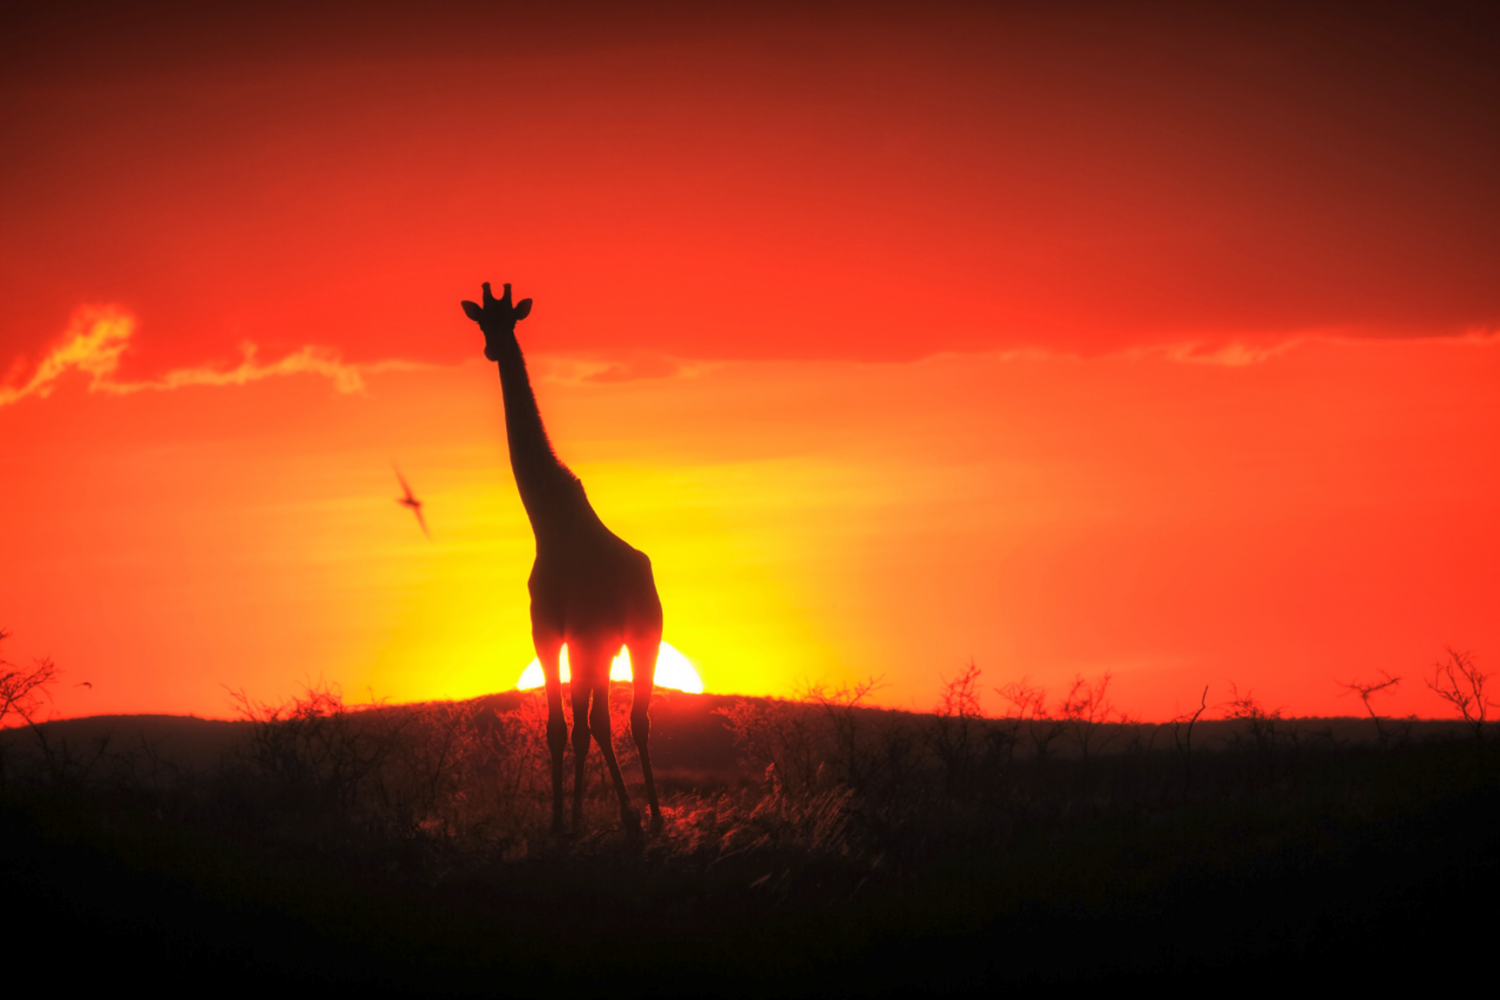 Sunset in serengeti national park